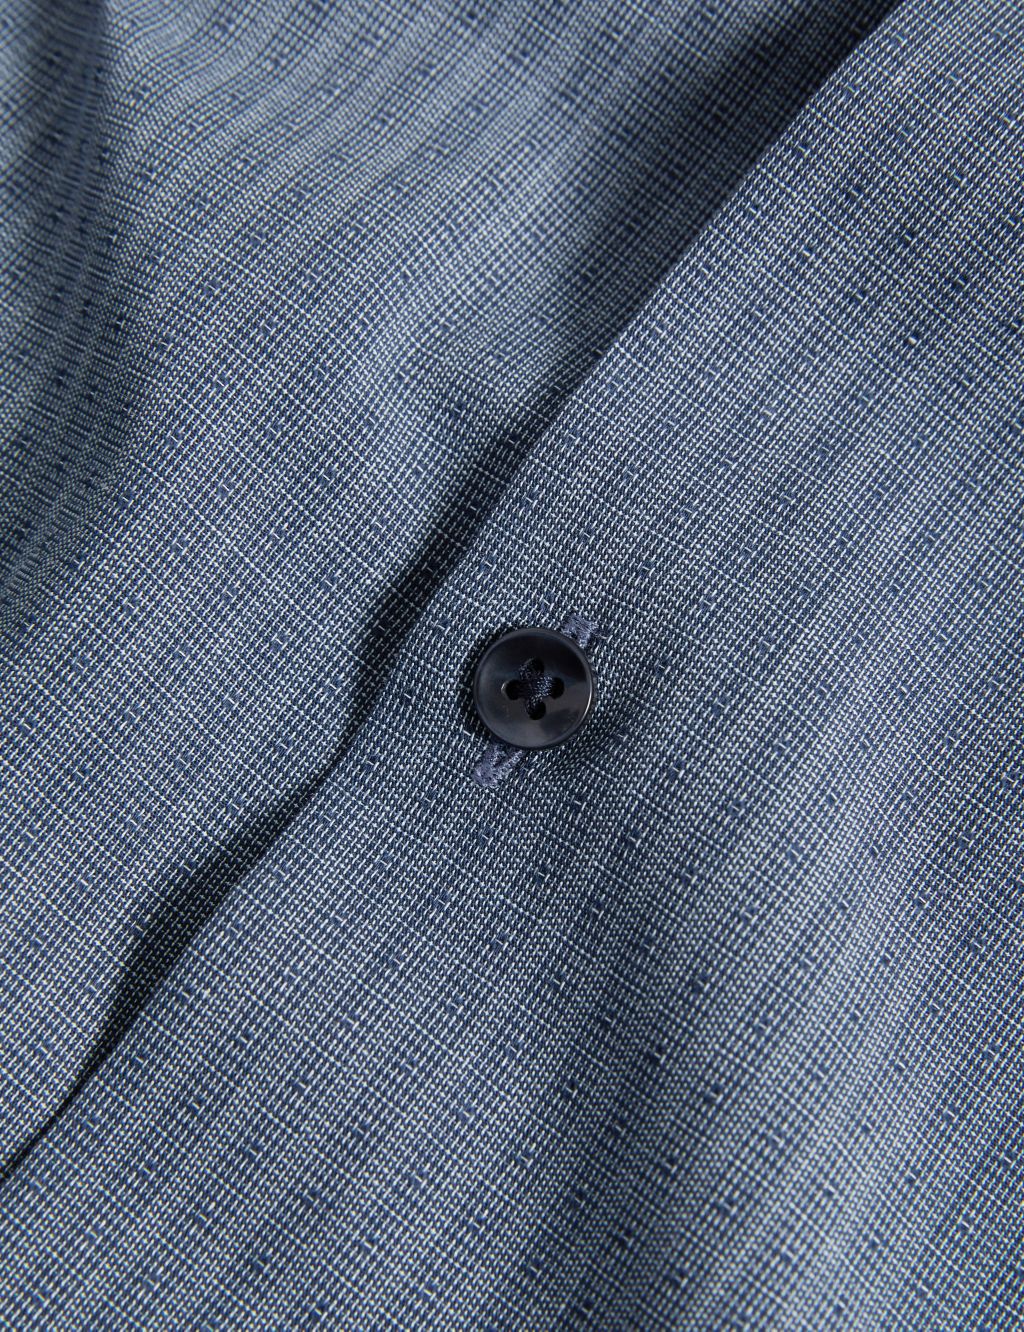 Regular Fit Non Iron Pure Cotton Shirt image 6